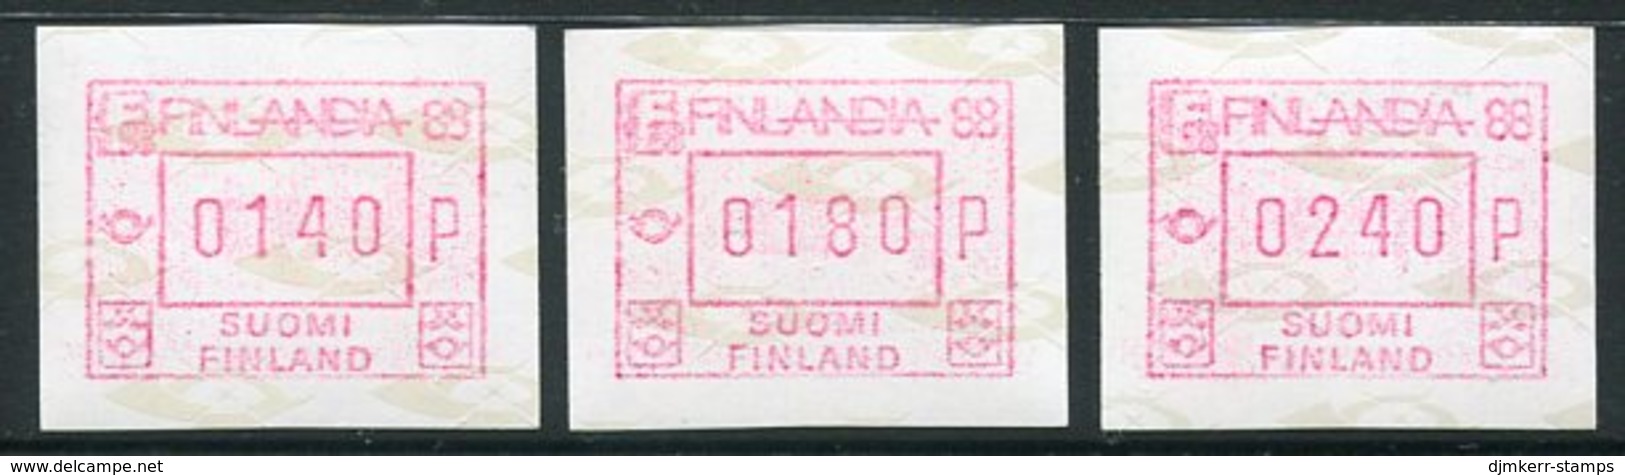 FINLAND 1986 FINLANDIA '88  ATM, Three Values MNH / **..  Michel 2 - Timbres De Distributeurs [ATM]